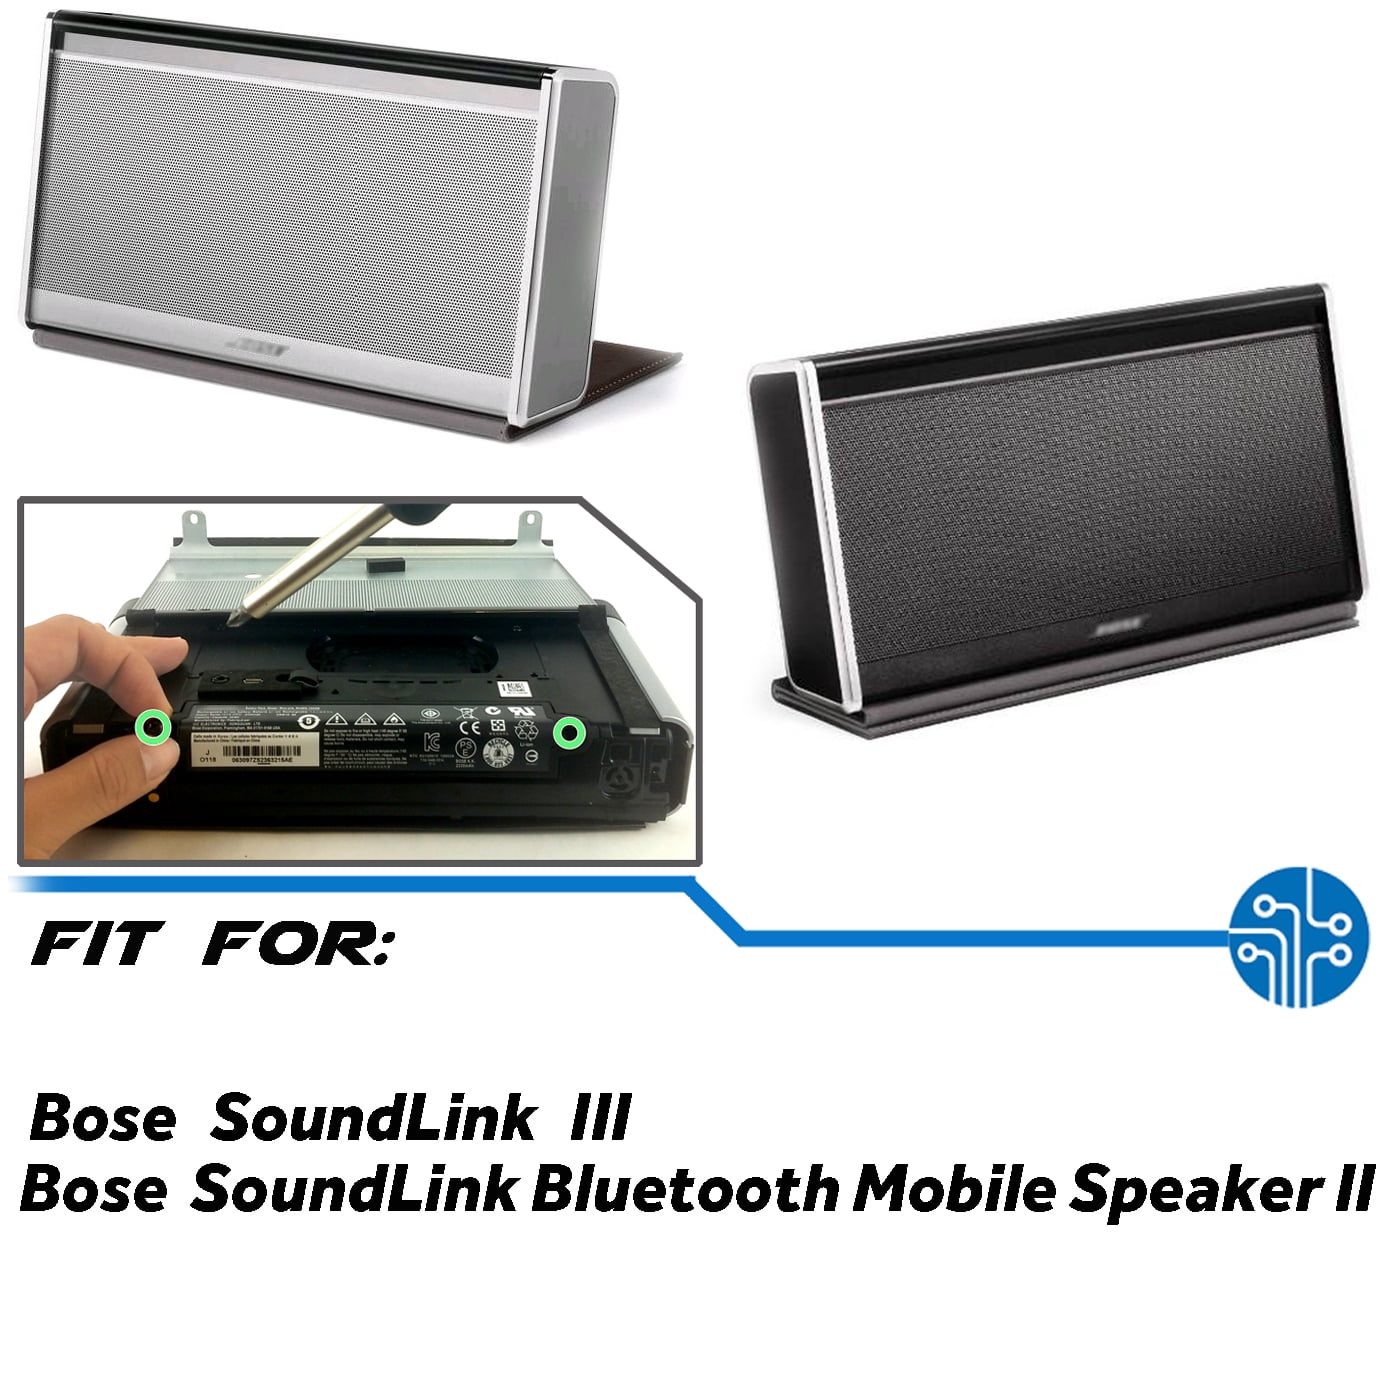 ironi Lighed lærebog New Replacement Battery for Boses SoundLink II III bluetooth speaker, P/N:  330107 359498 359498 330107A 359495 330105 404600 - 12 months warranty -  Walmart.com